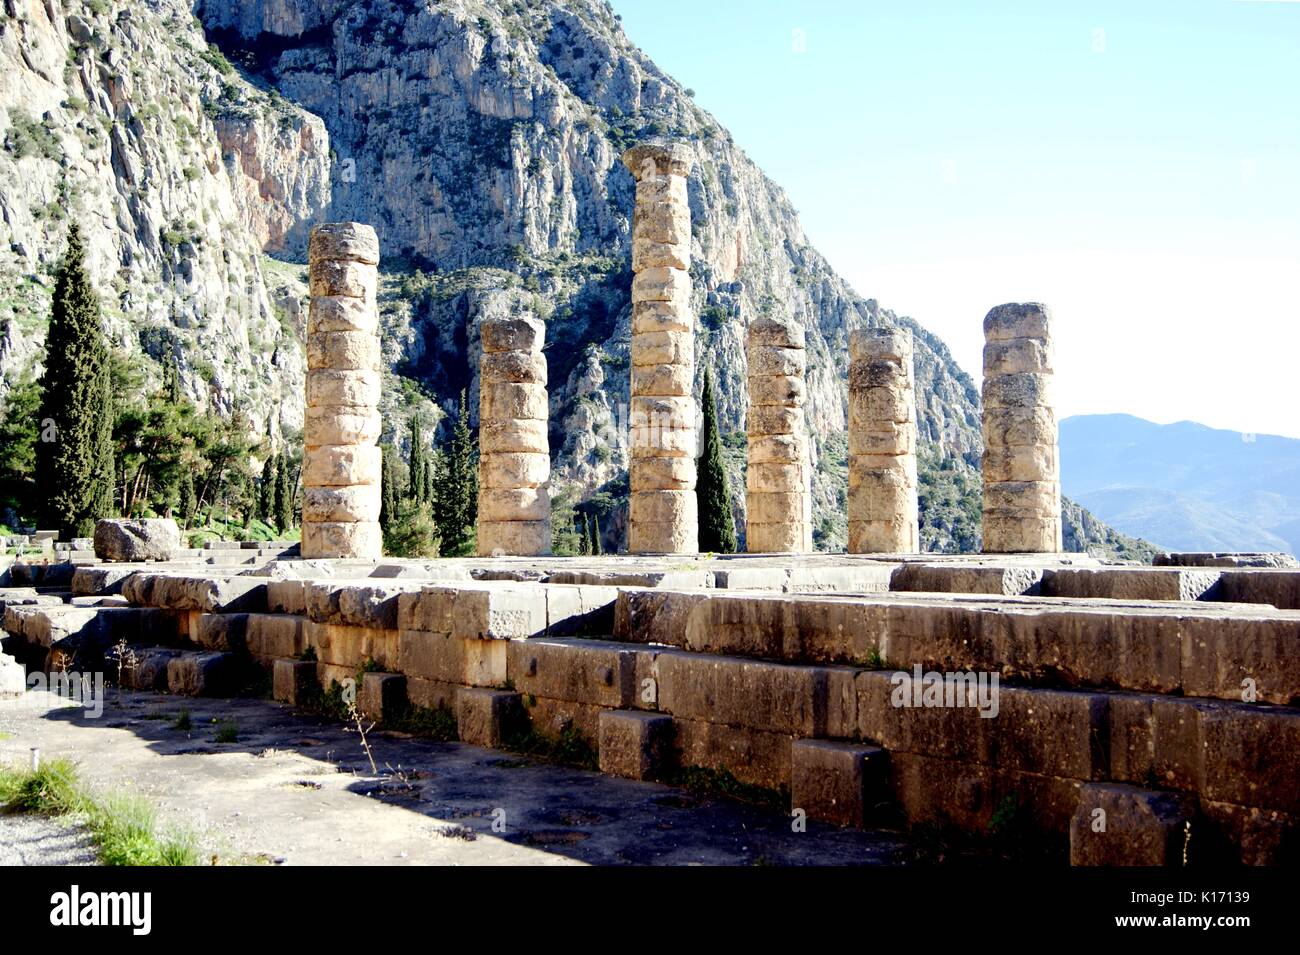 The Columns of the Temple of Apollo, Ancient Delphi, Greece Stock Photo